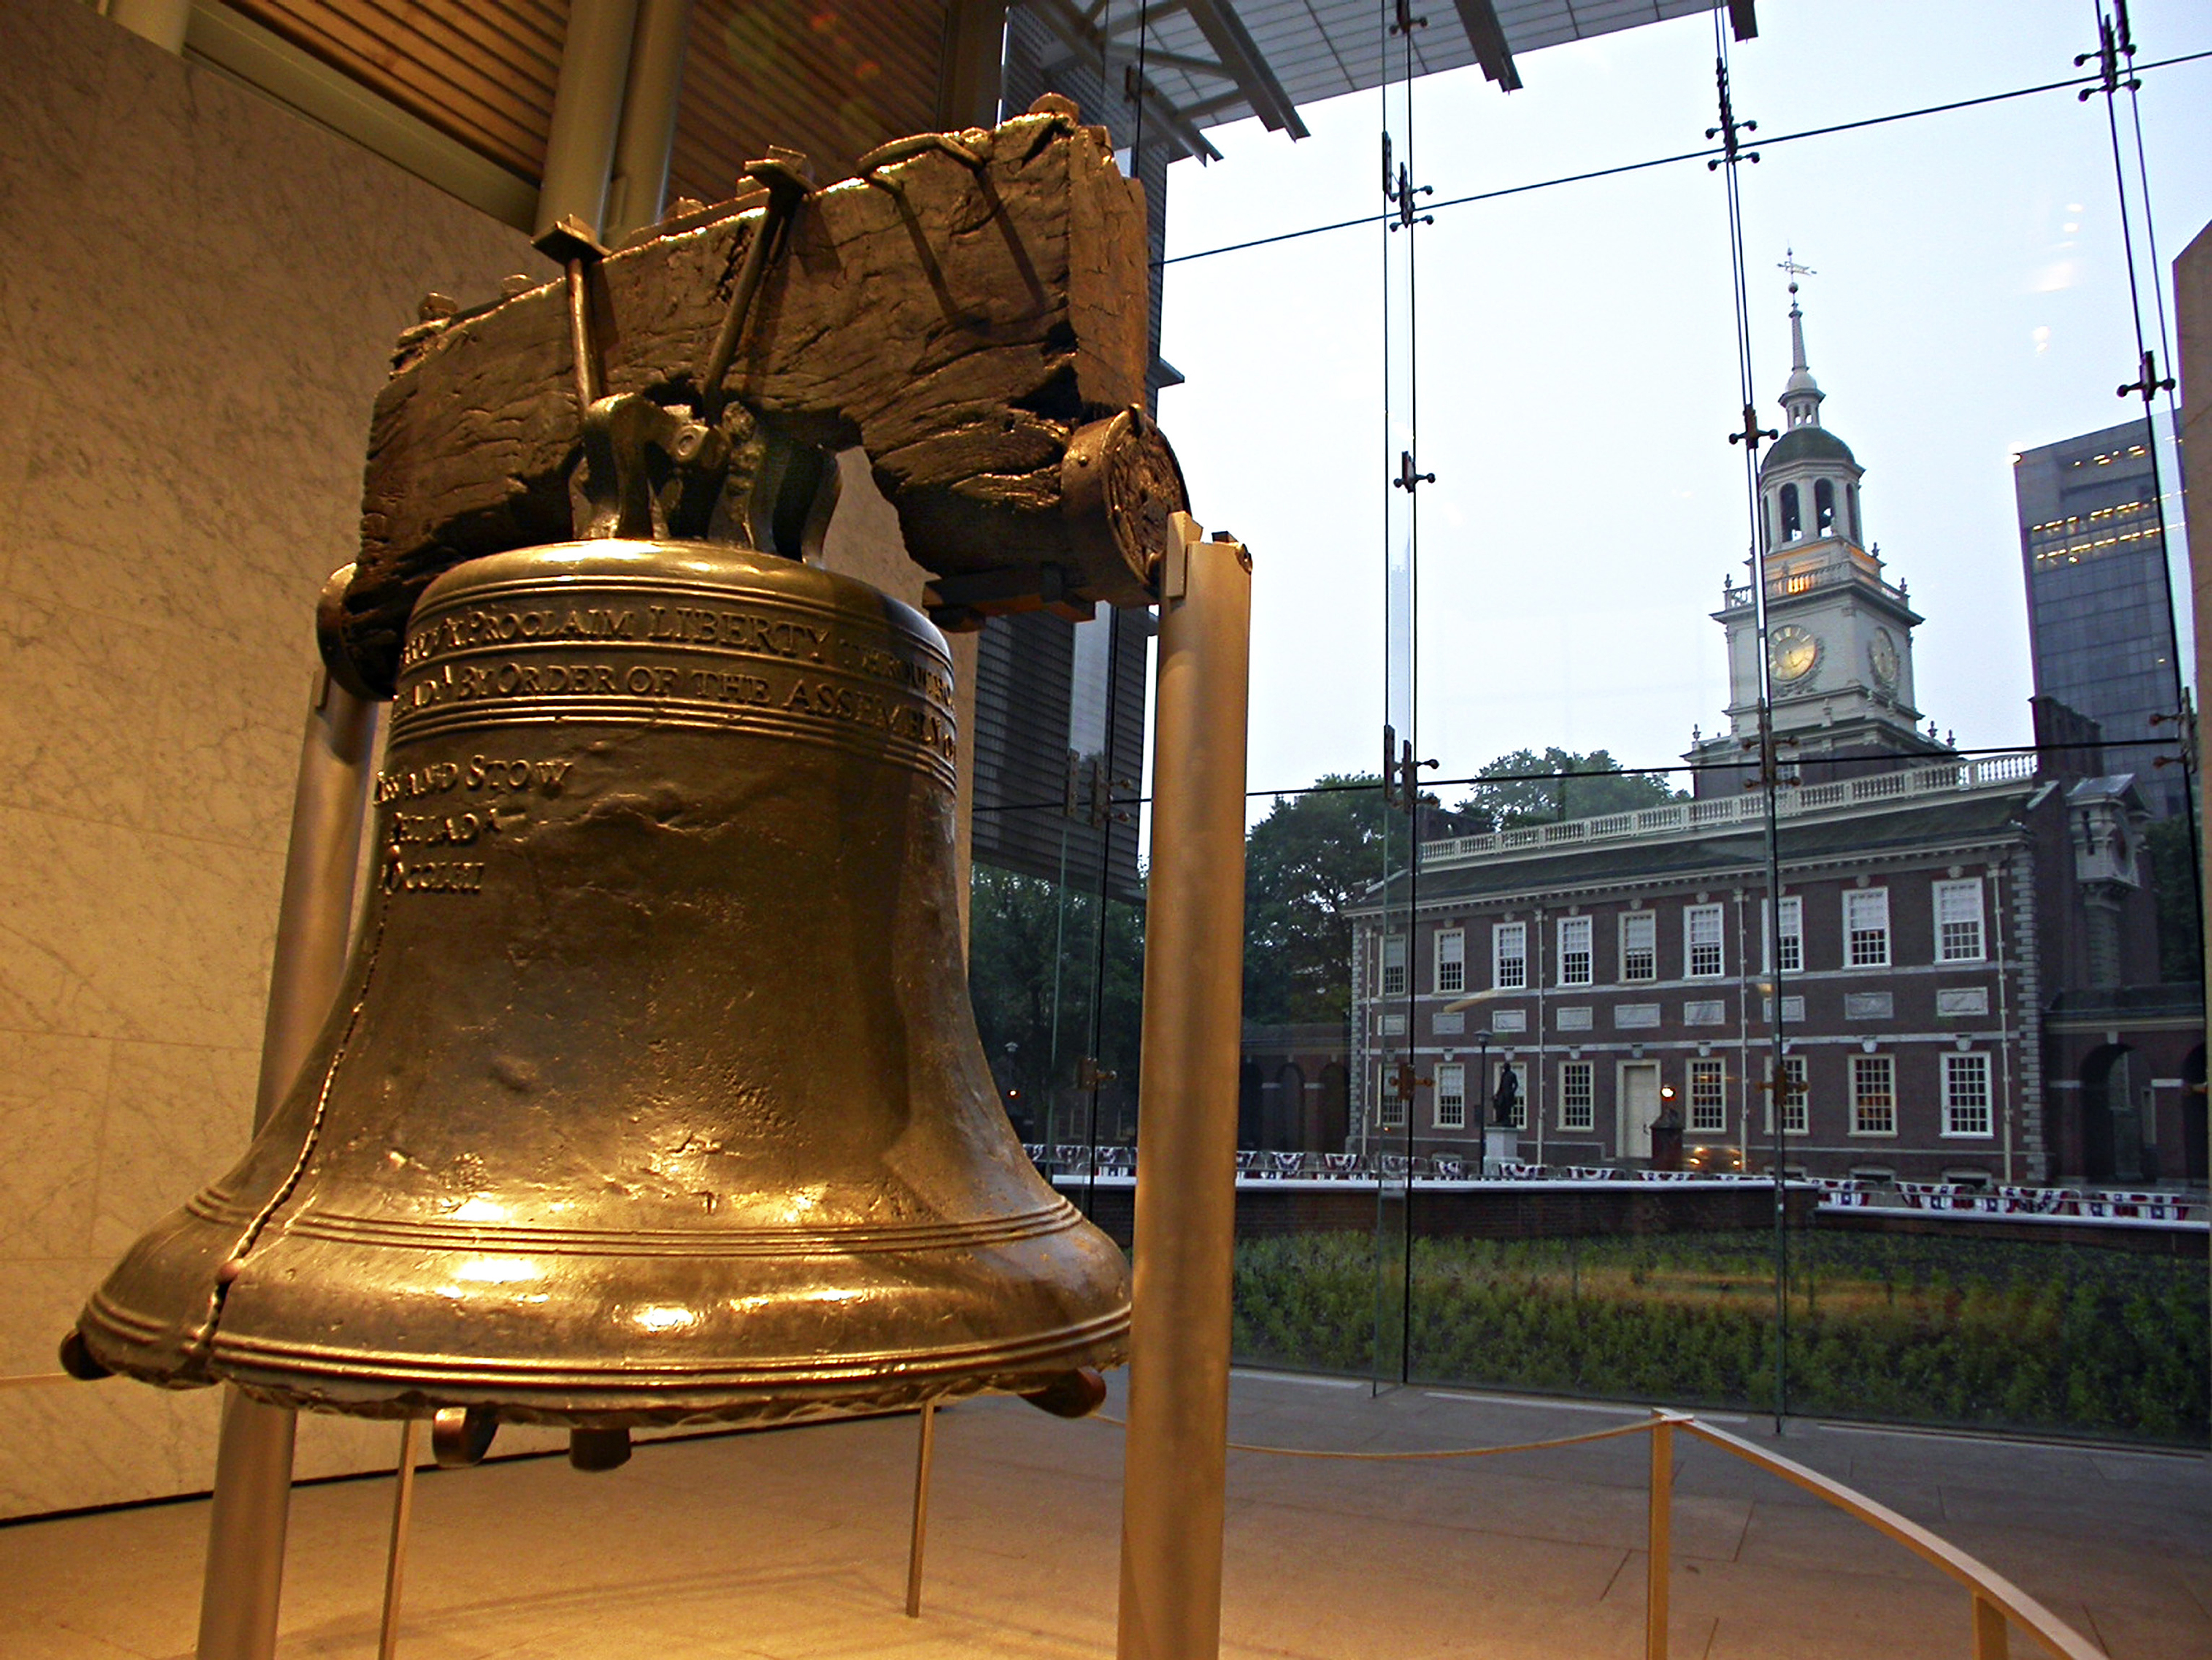 The Liberty Bell in Philadelphia. (Bill Raften&mdash;Getty Images)